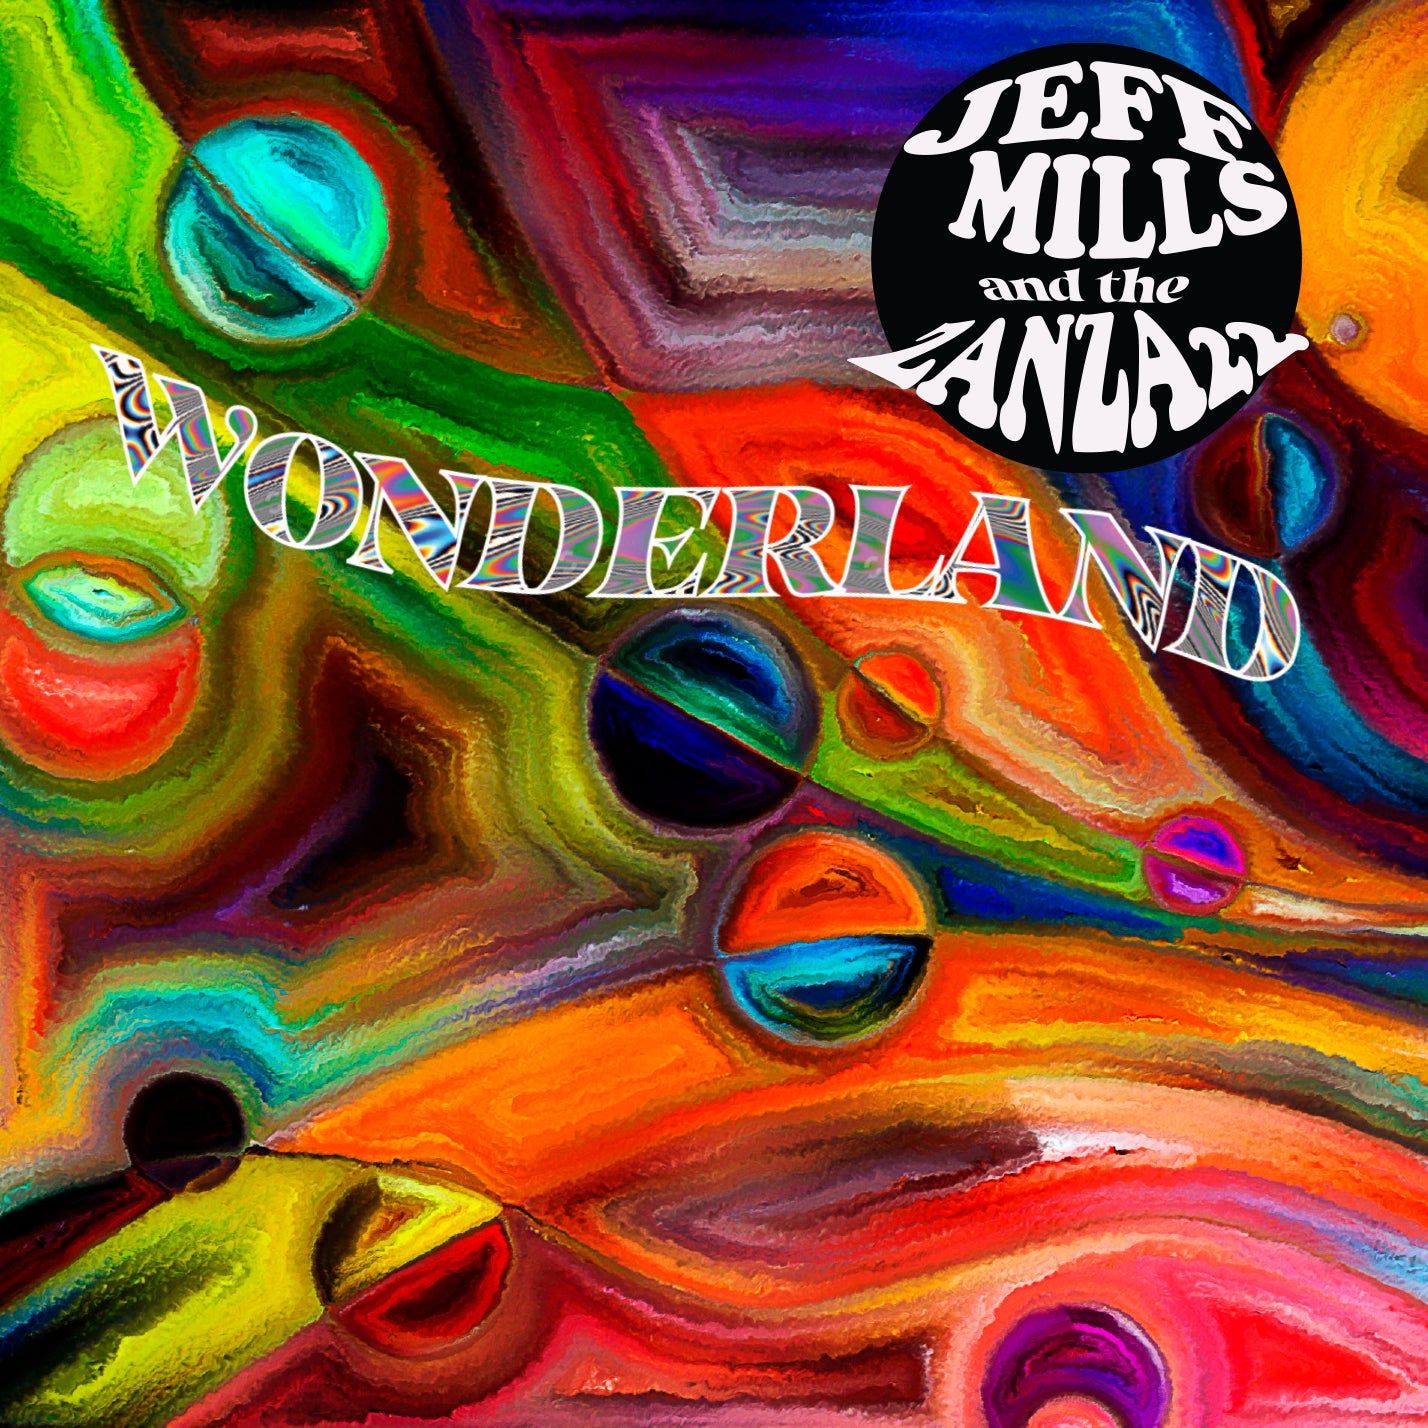 Wonderland - CD